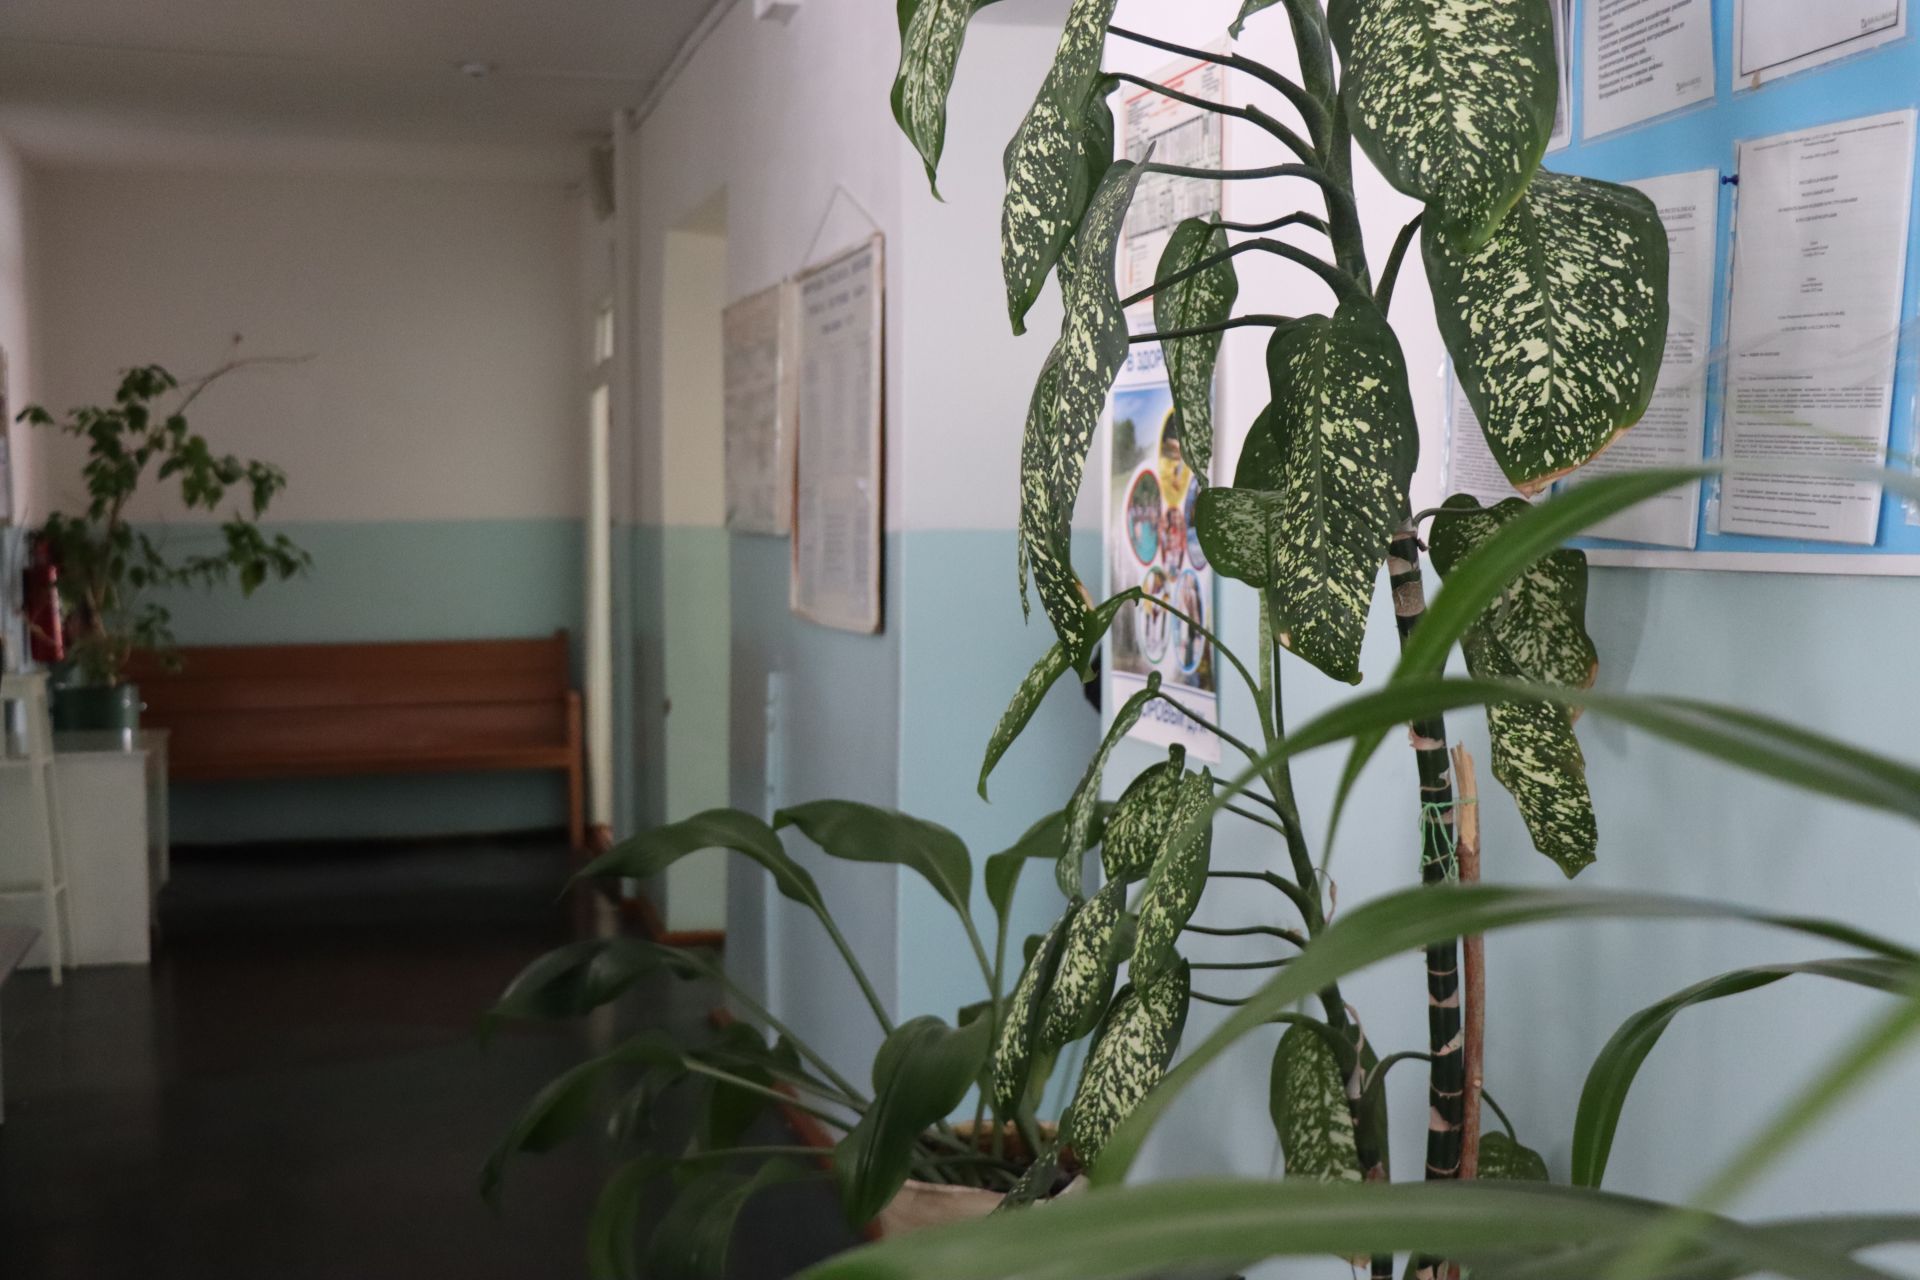 Алмаз Ахметшин посетил Чулпановскую участковую больницу